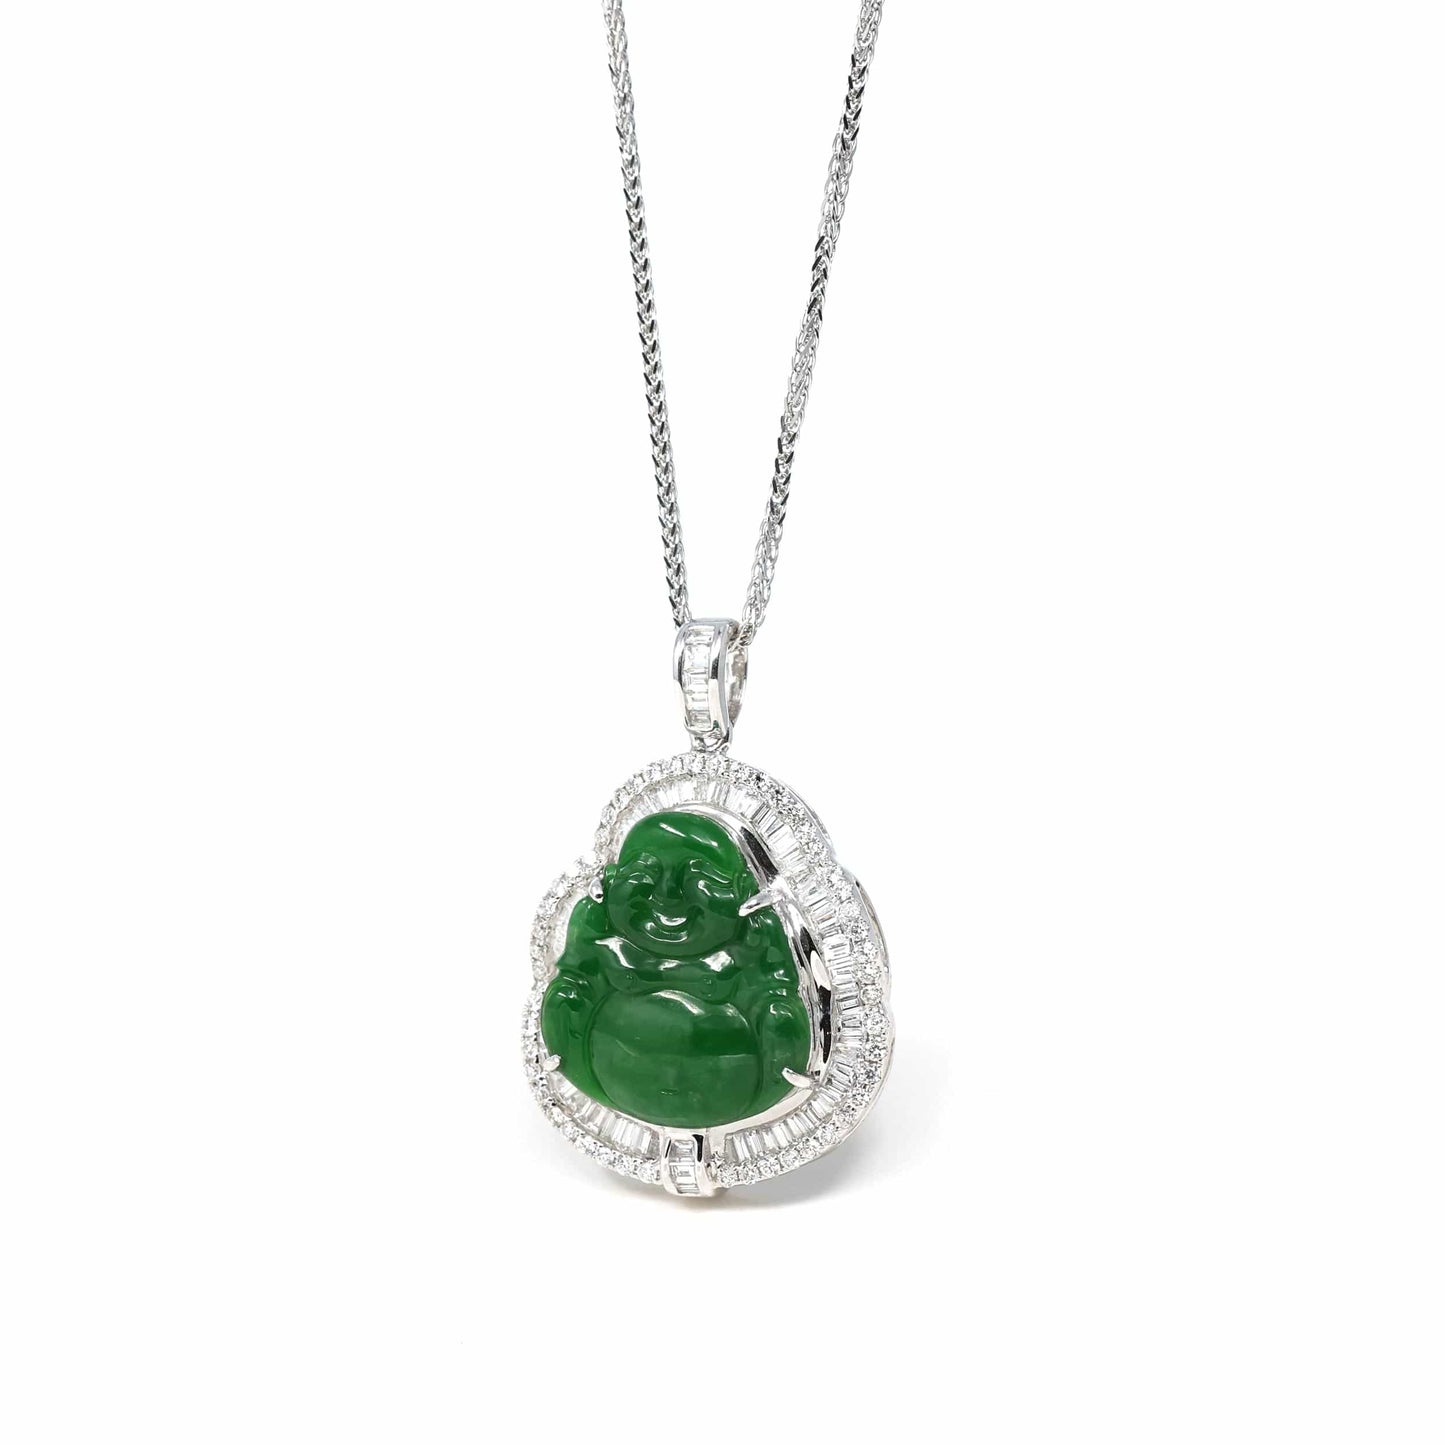 RealJade Co. 18k Gold Jadeite Necklace 18K White Gold High-End Imperial Jadeite Jade Buddha Necklace with Diamonds